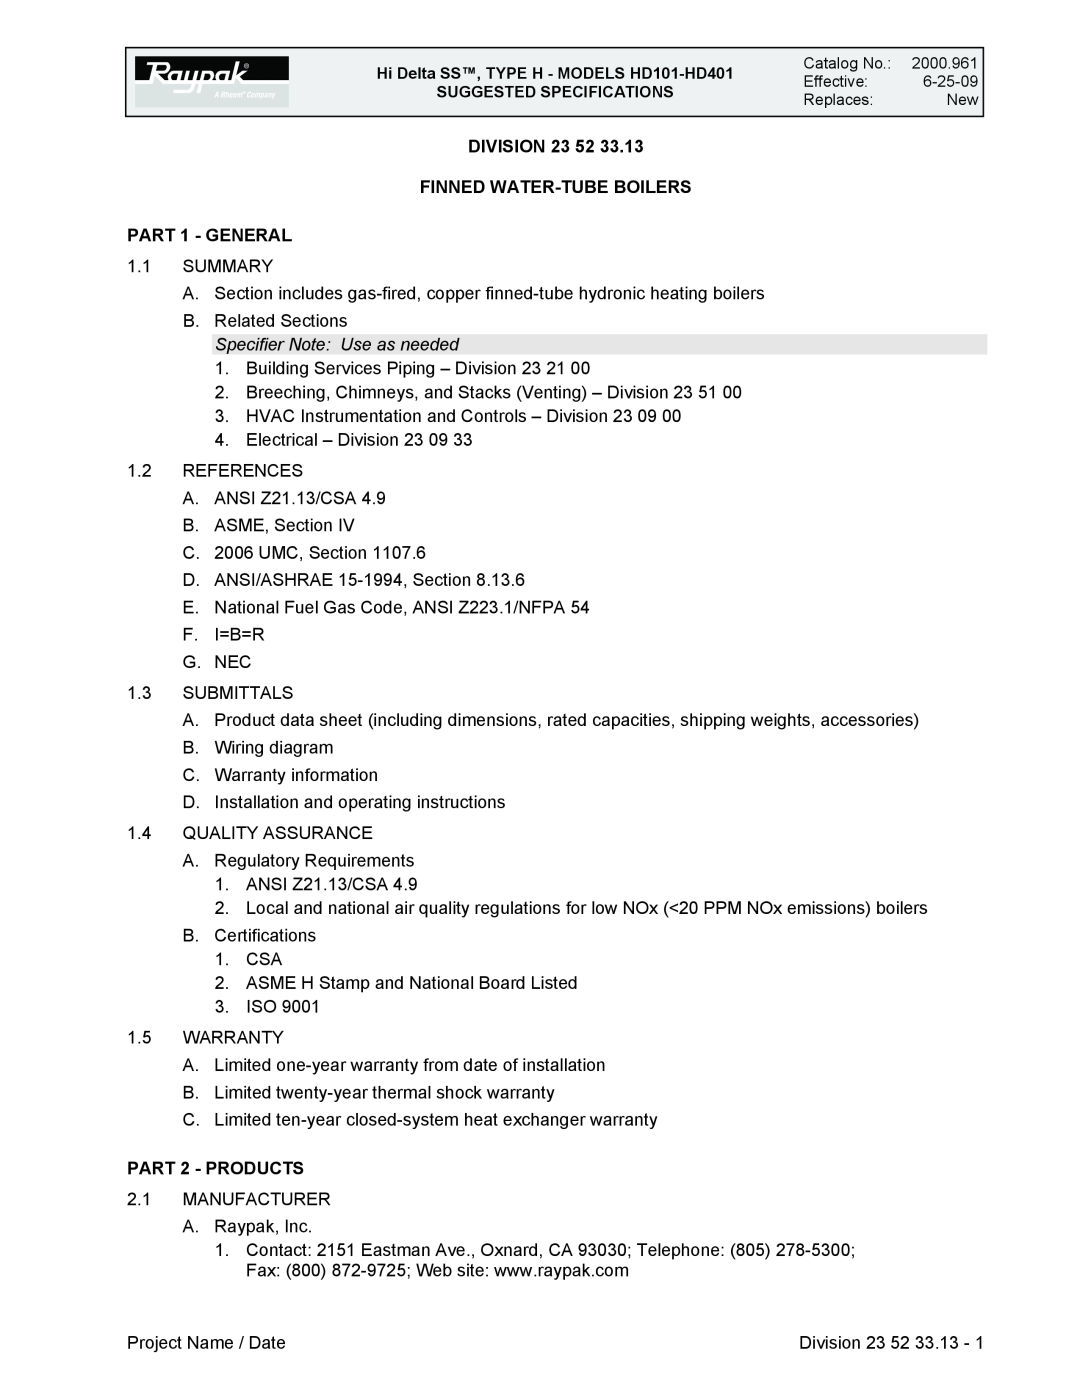 Raypak manual User’S Information Manual, Models HD101-HD401 Type H 